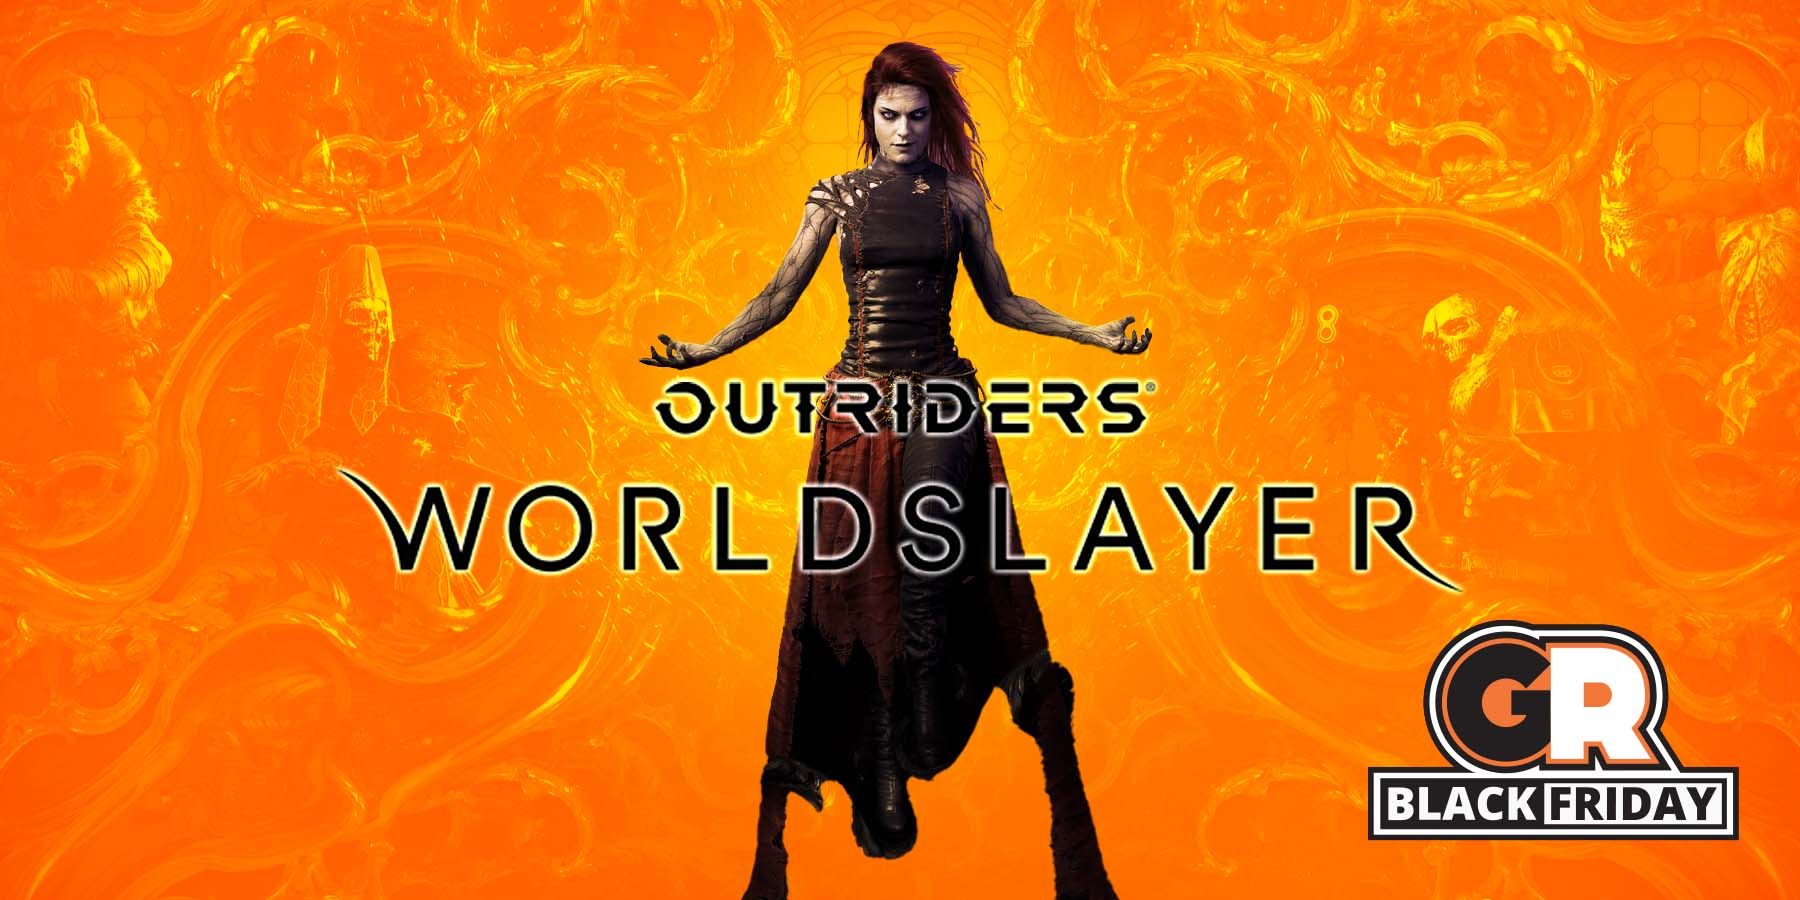 Outriders Worldslayer Gamerant Amazon Black Friday 